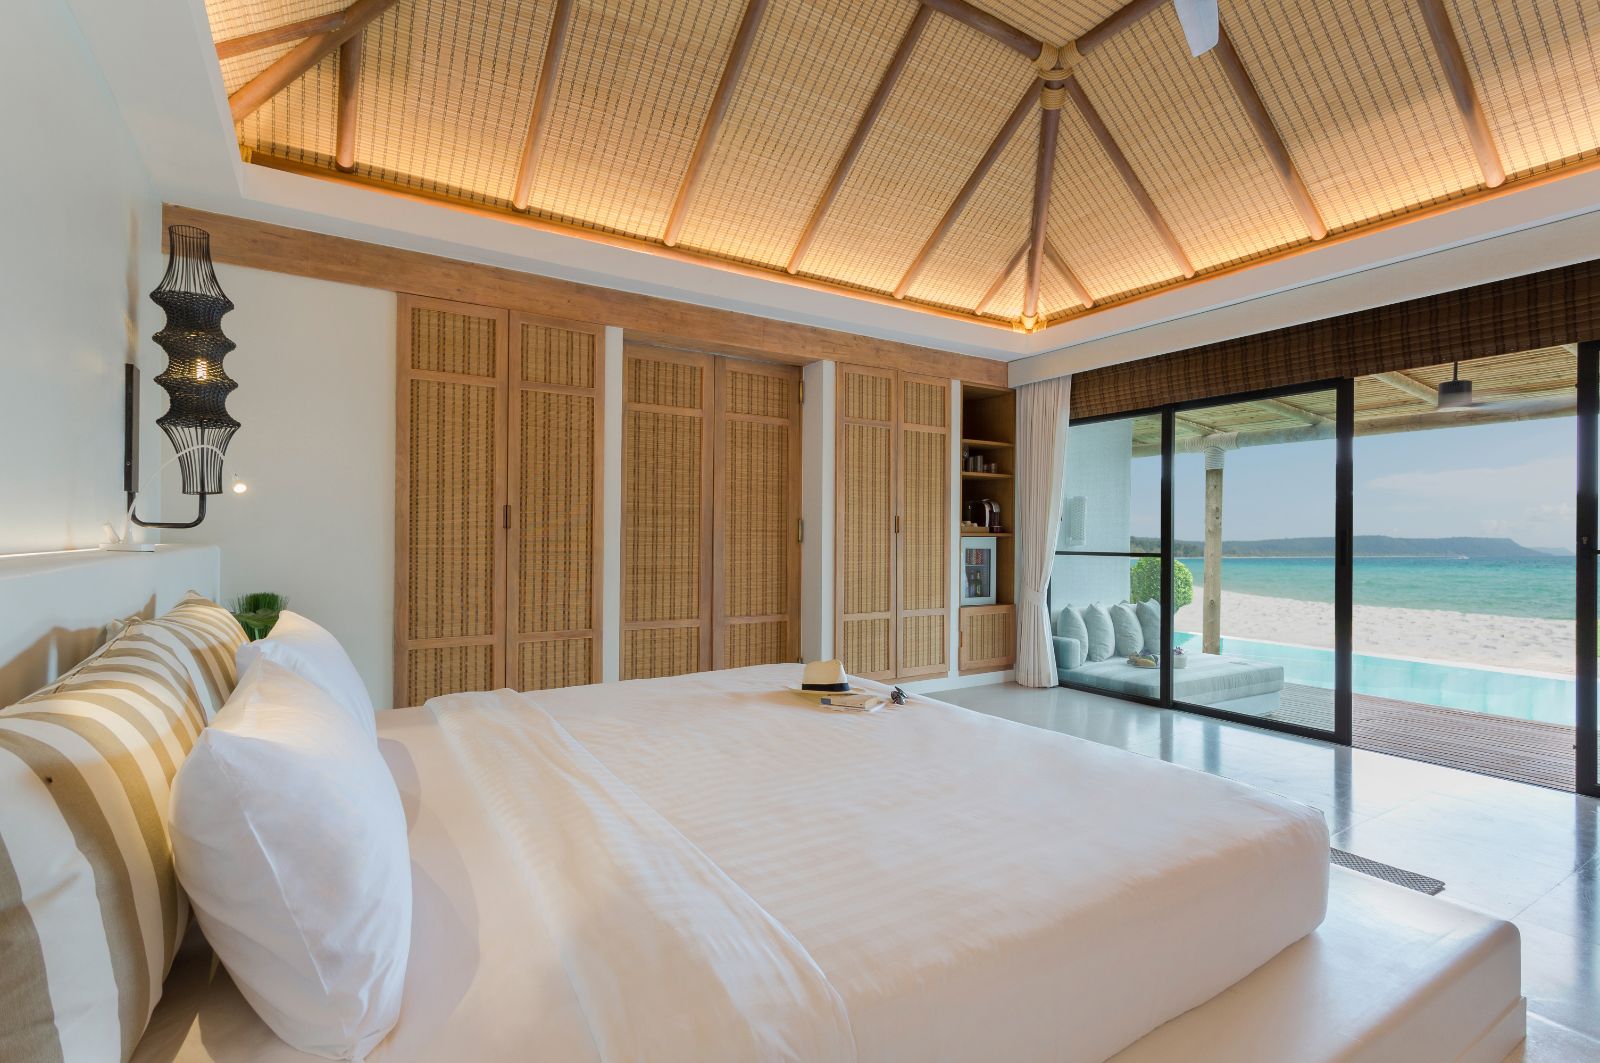 Beachfront pool villa bedroom at the Royal Sands Resort in Koh Rong, Cambodia